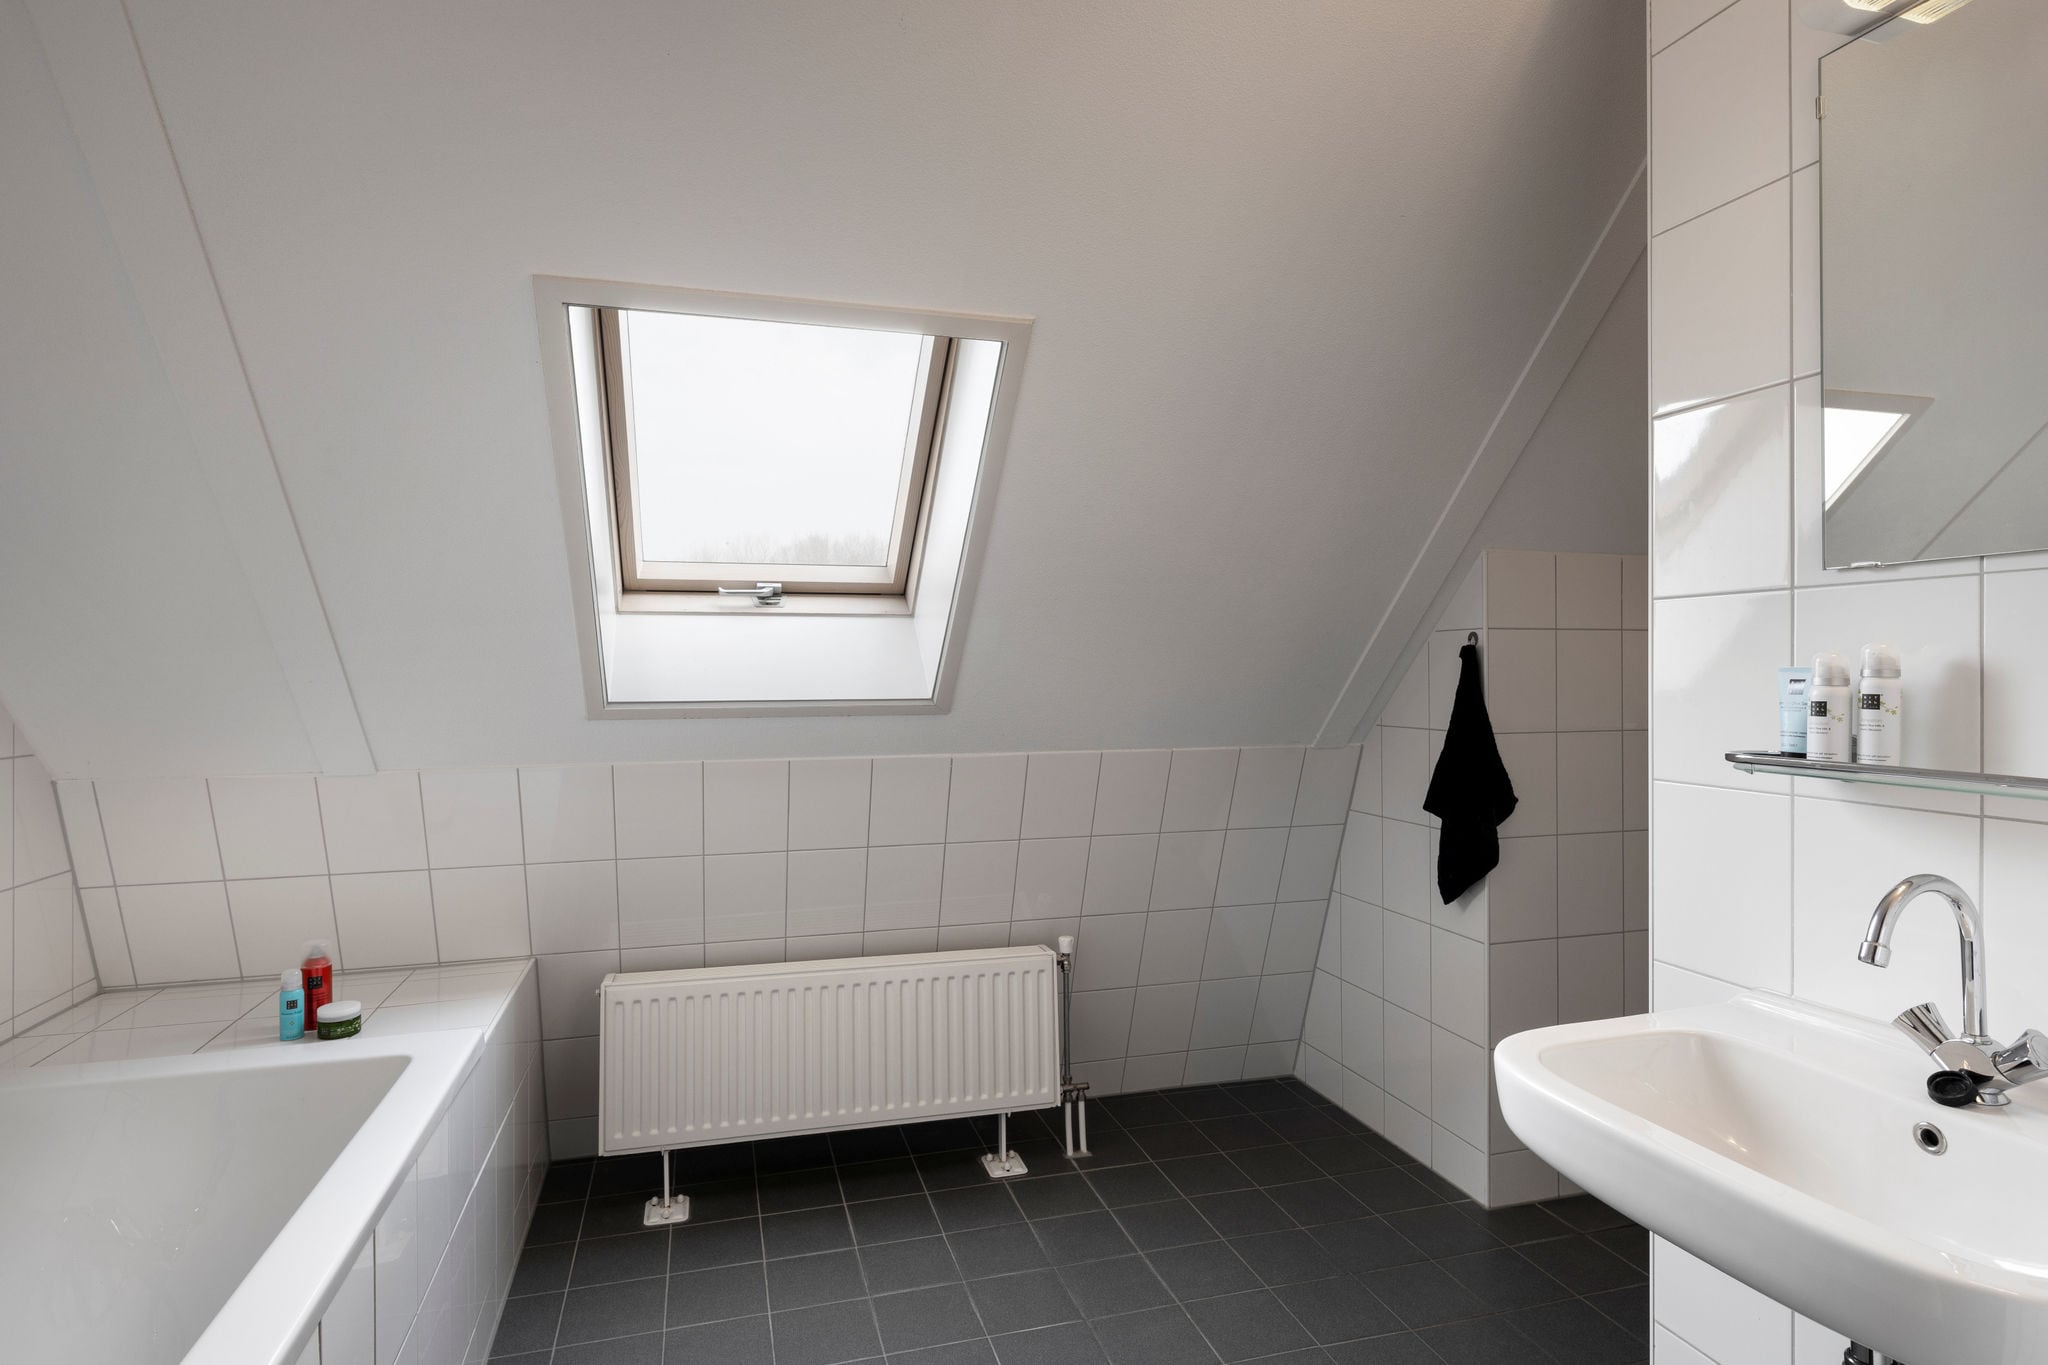 Luxury 2 bathroom villa with solarium, 8 km. from Hoogeveen